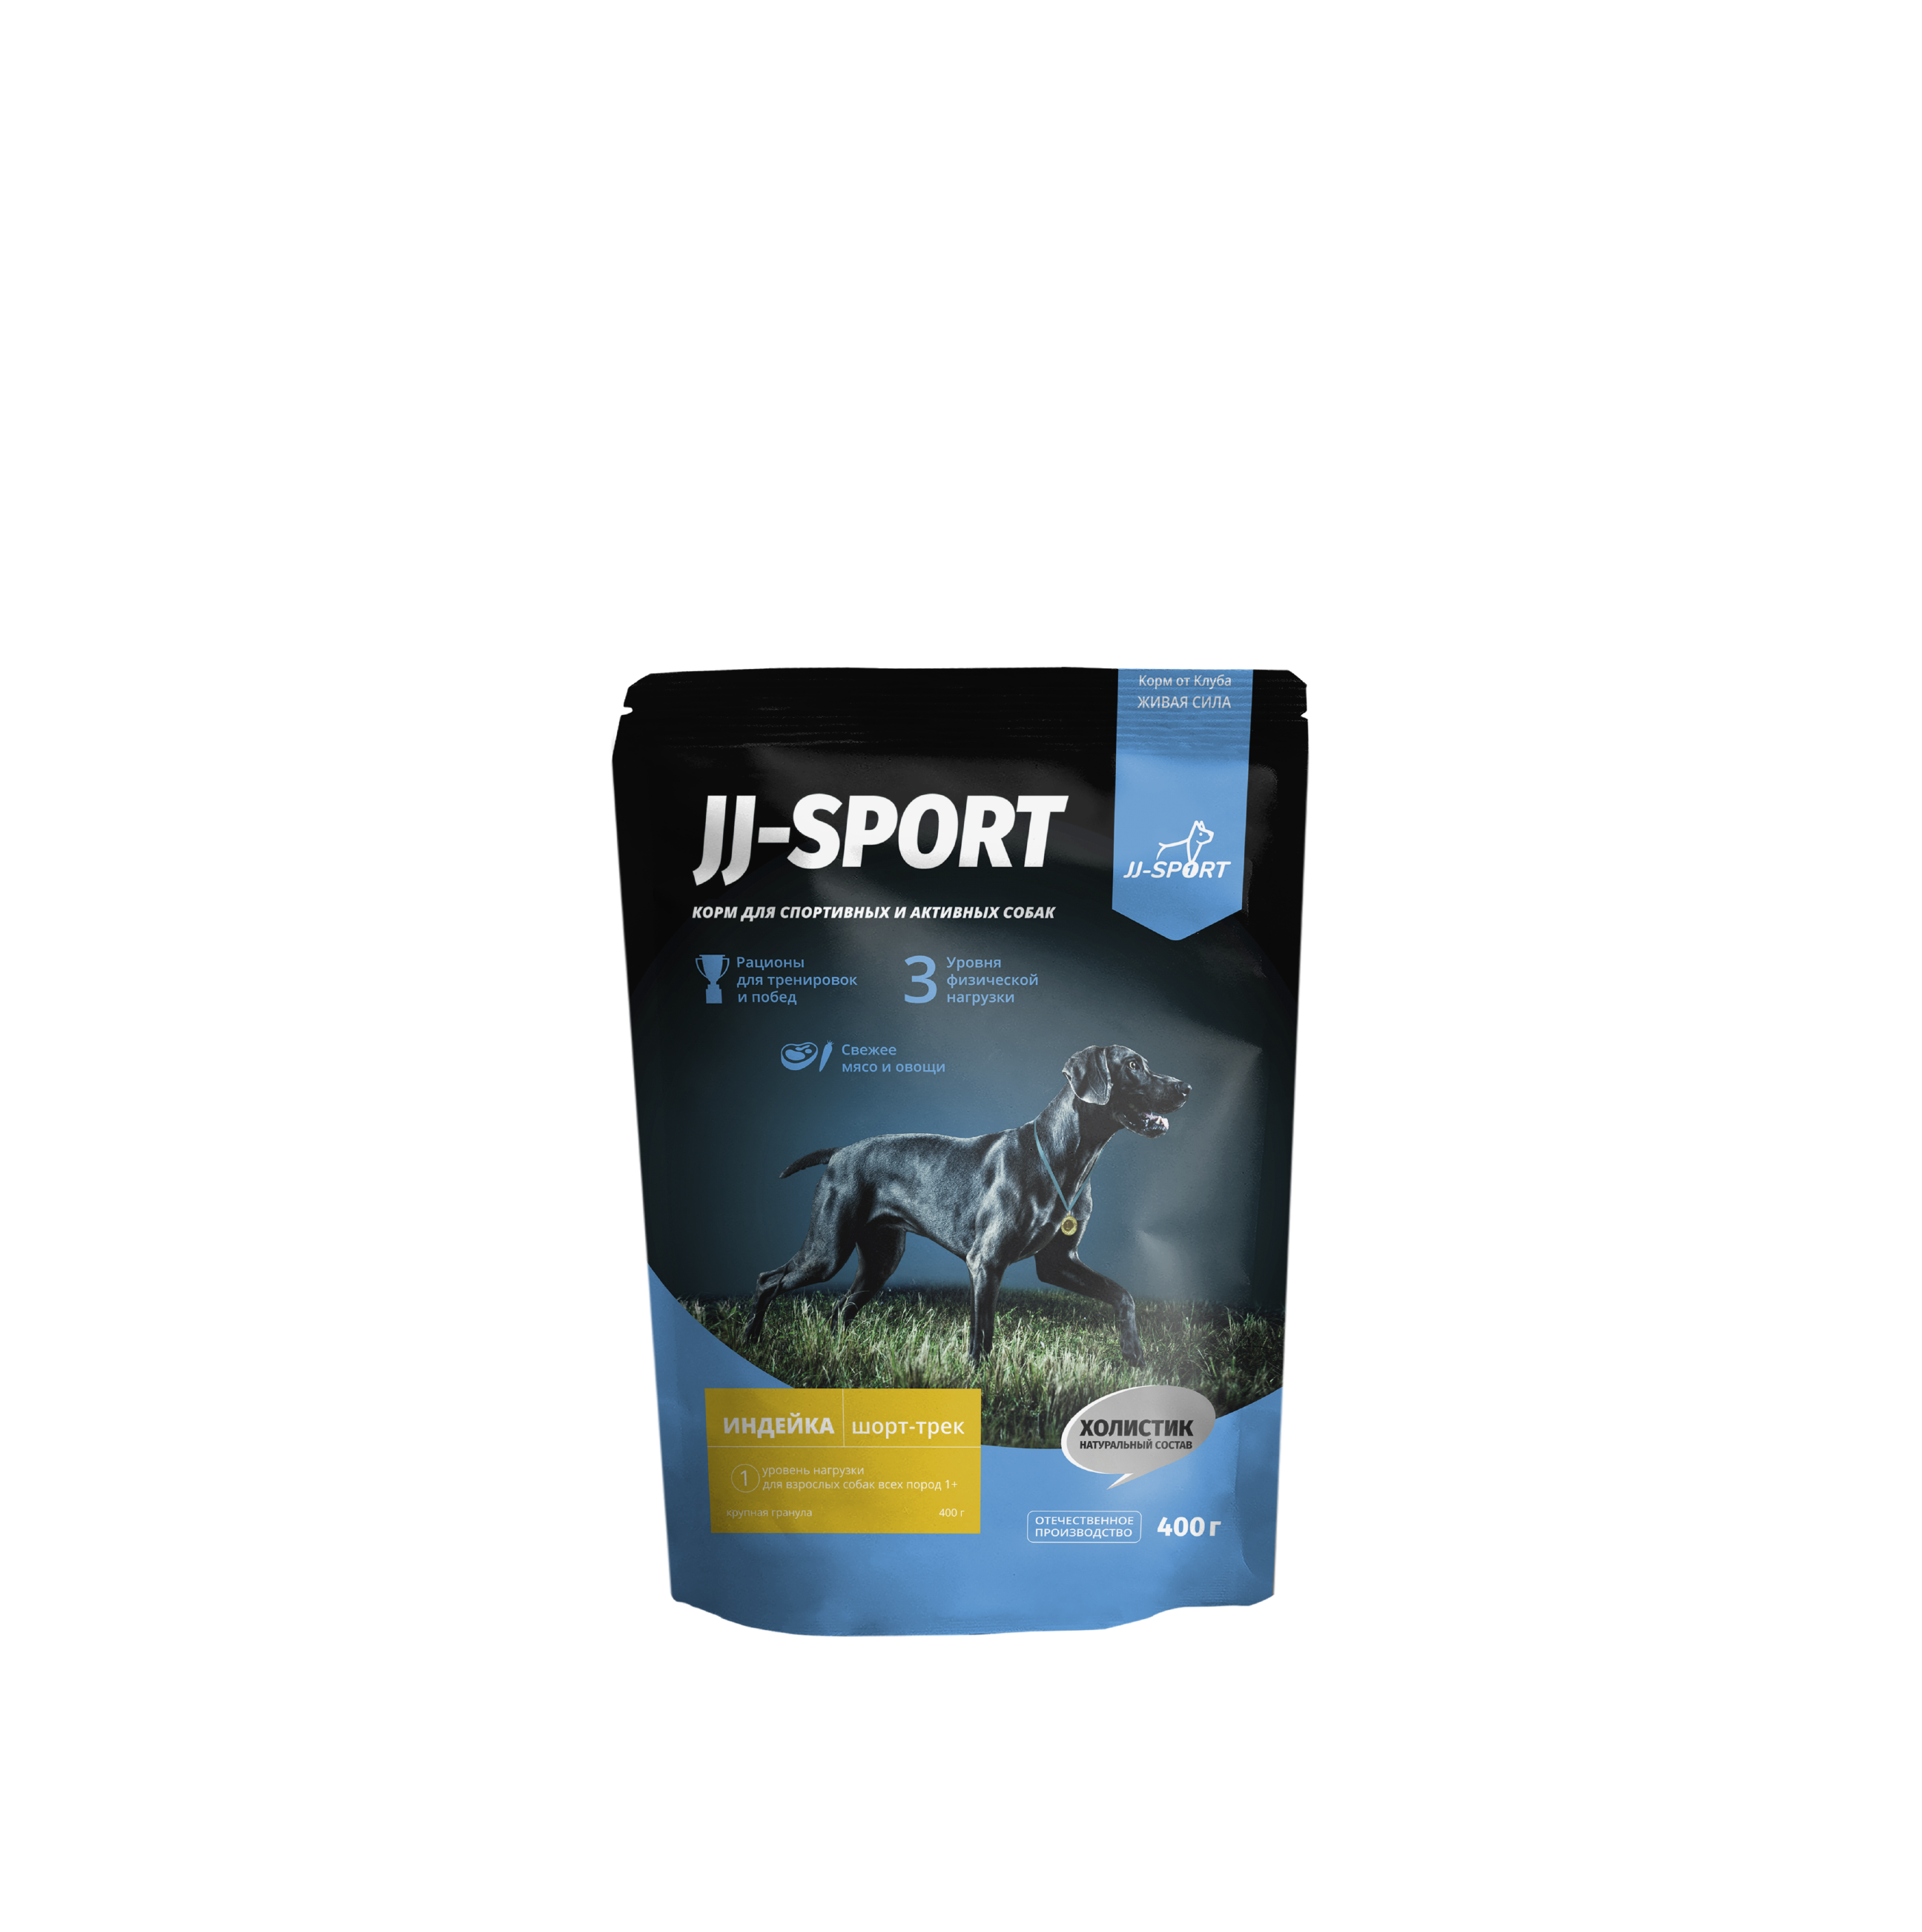 Сухой корм для собак JJ-SPORT Шорт-трек Живая Сила, крупная гранула, с индейкой, 0,4